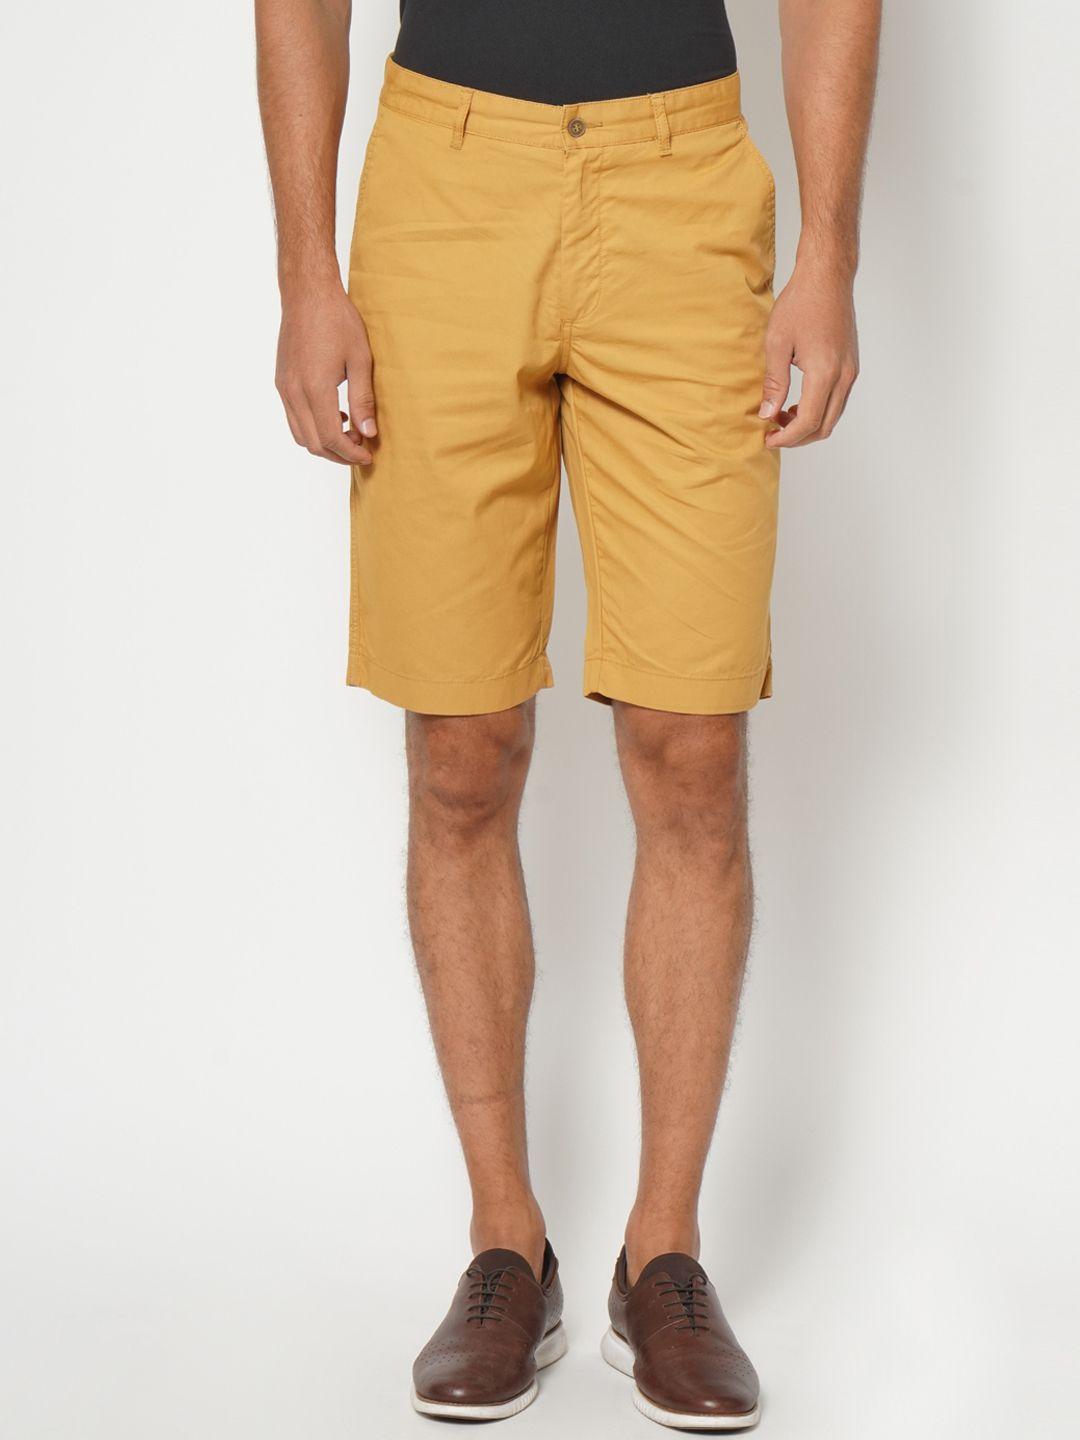 blackberrys-men-yellow-bs-12-slim-fit-low-rise-chino-shorts